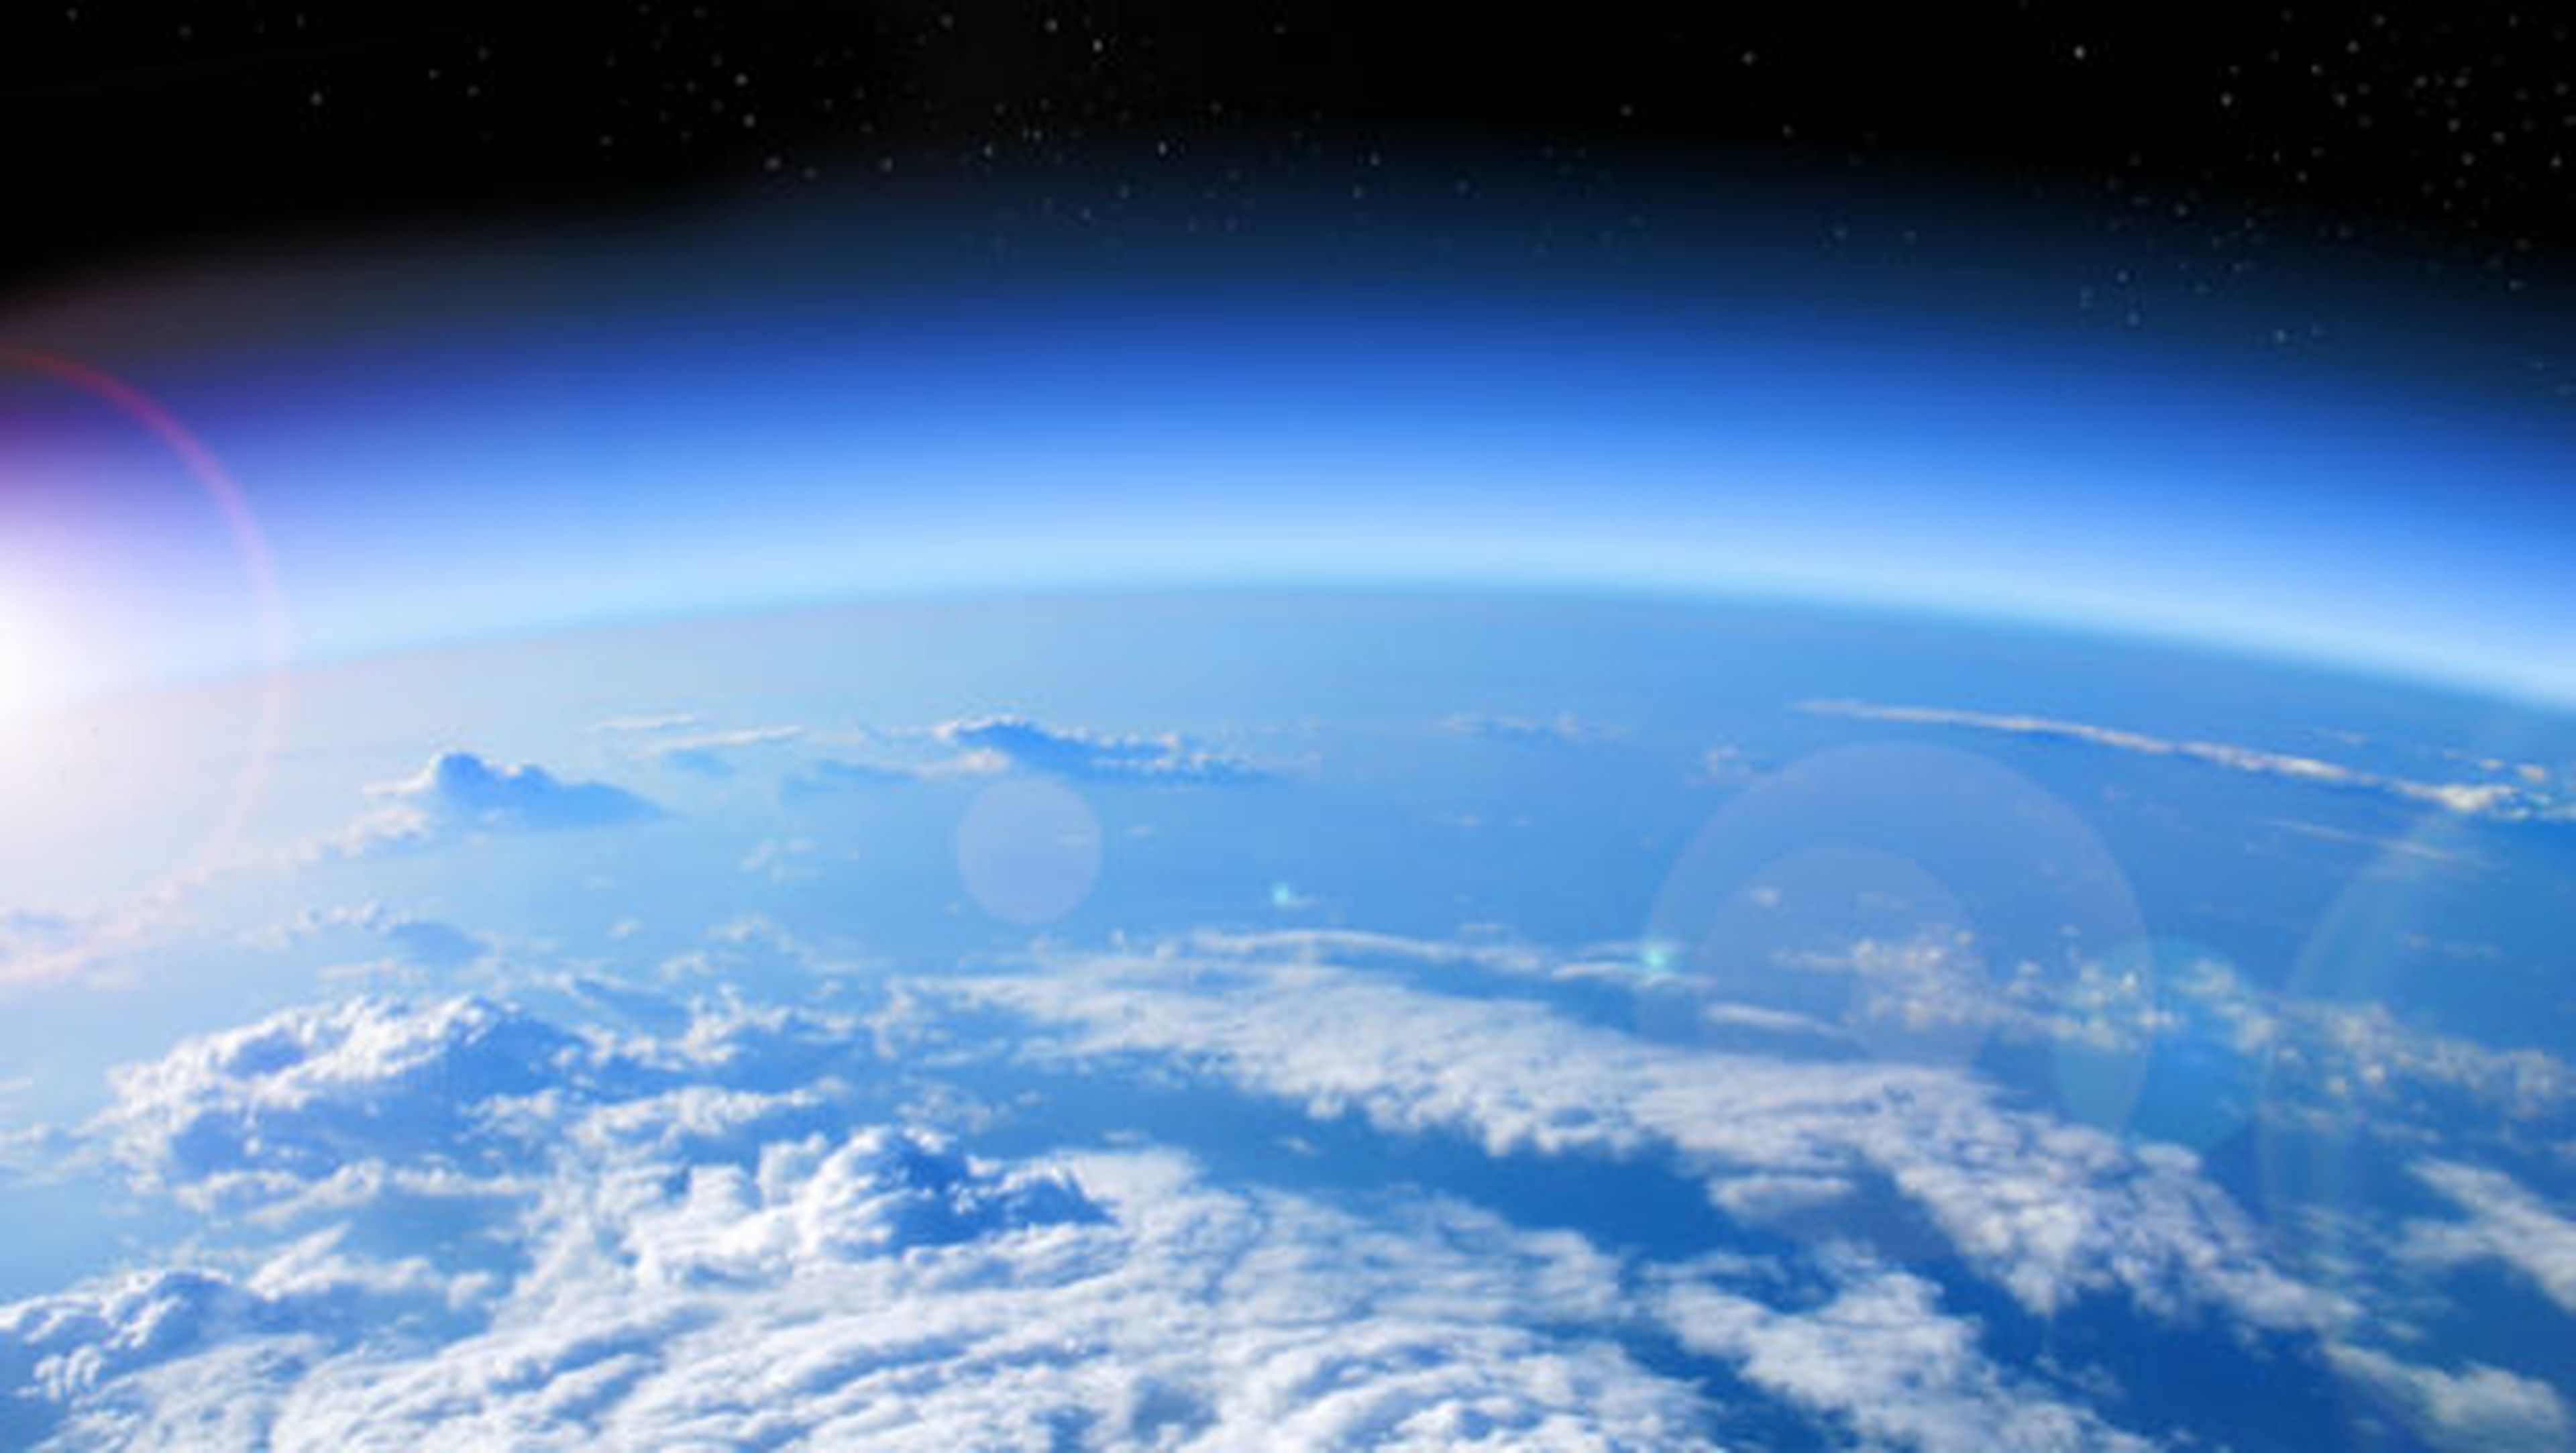 El agujero en la capa de ozono se reduce.